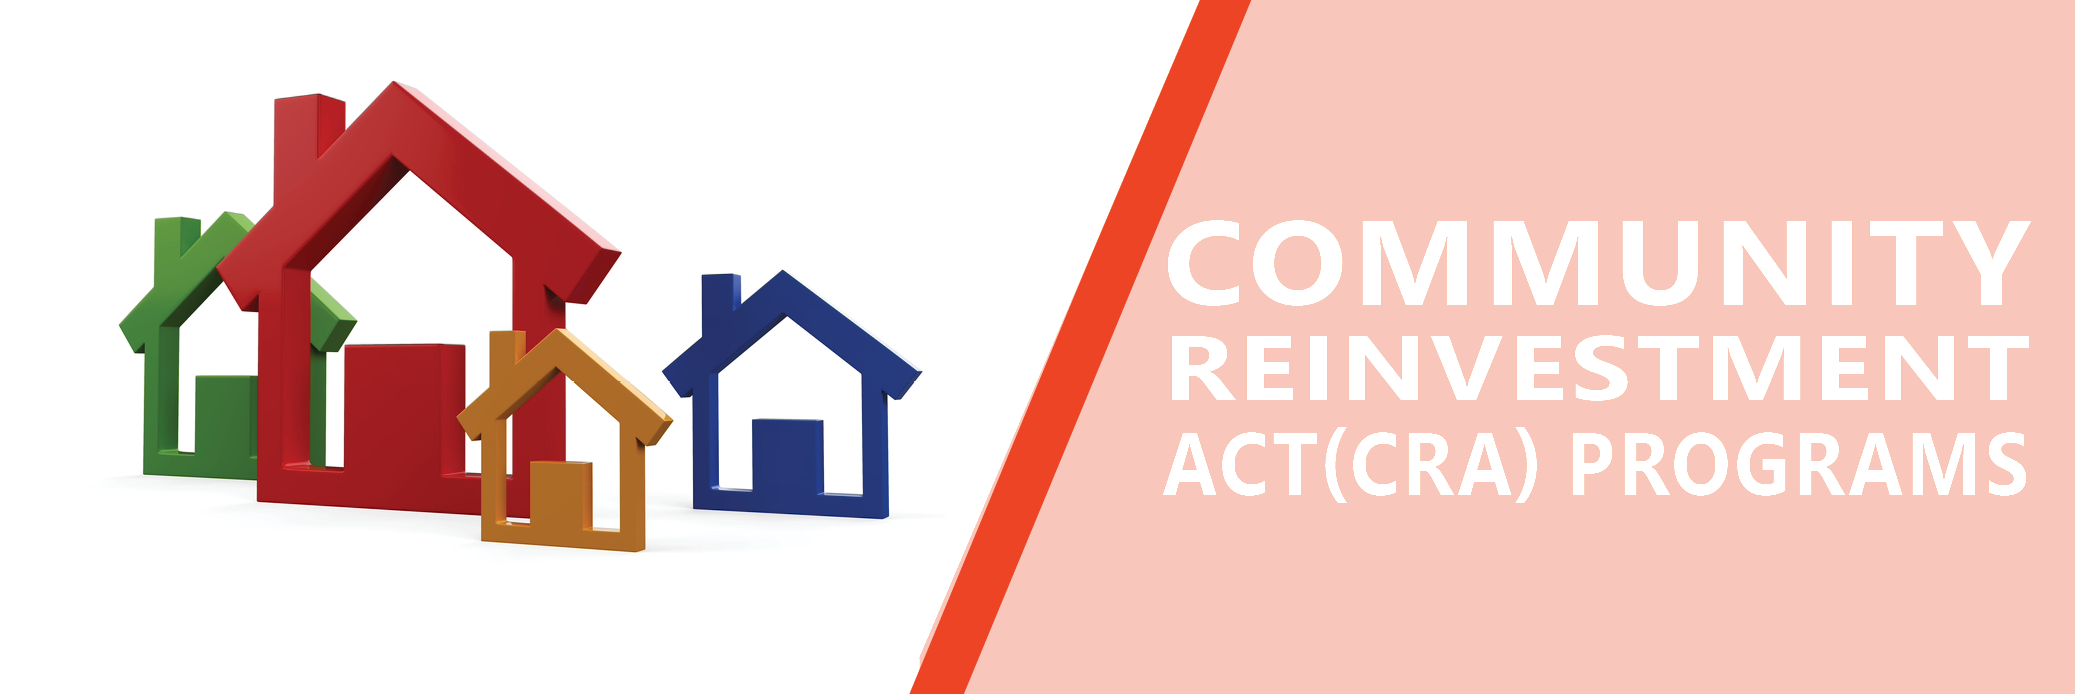 Community Reinvestment Act CRA Program